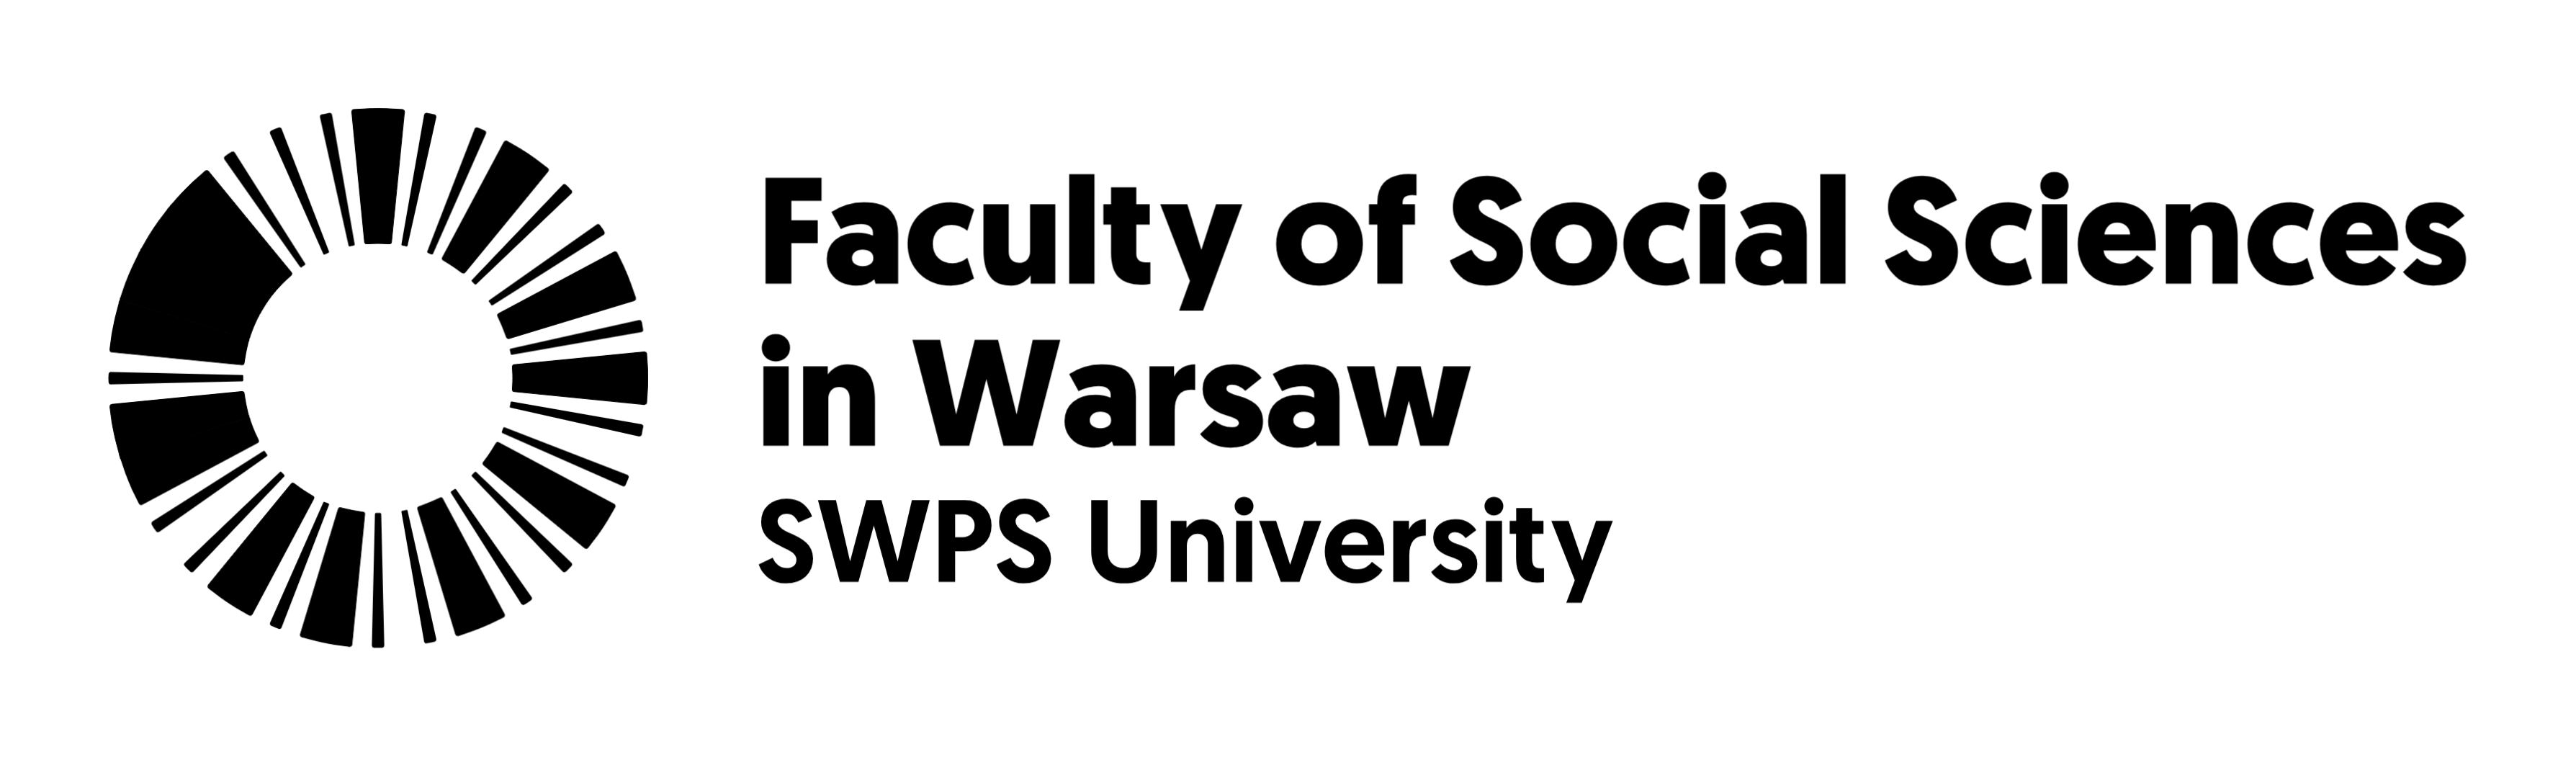 Faculty of Social Sciences in Warsaw